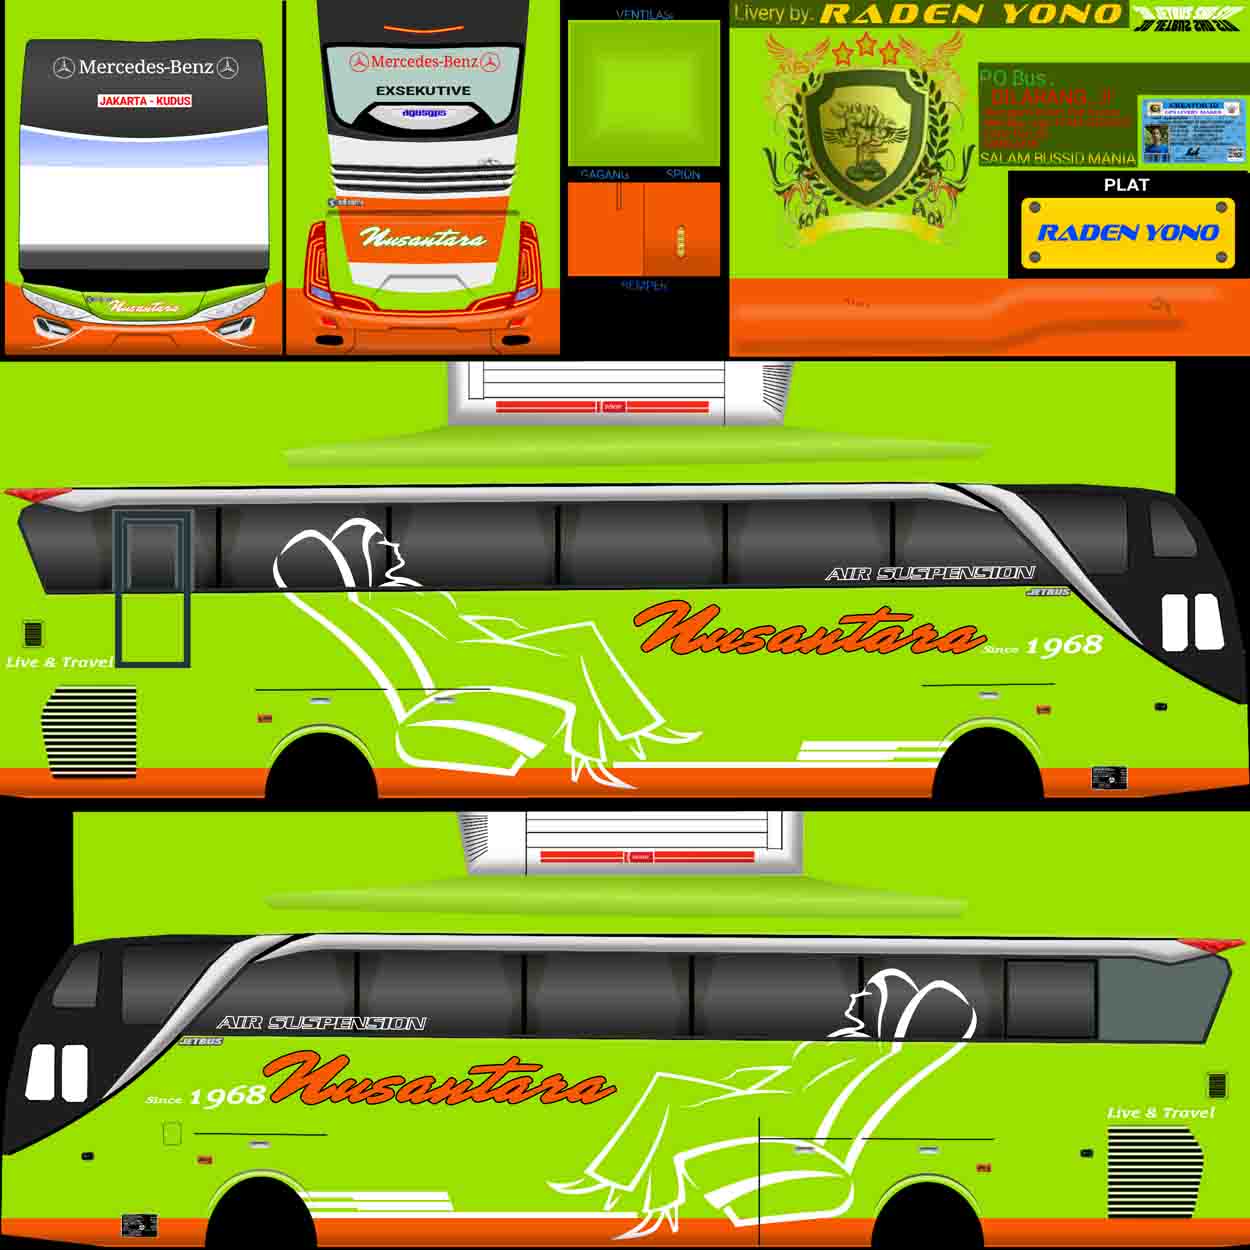 livery bus nusantara